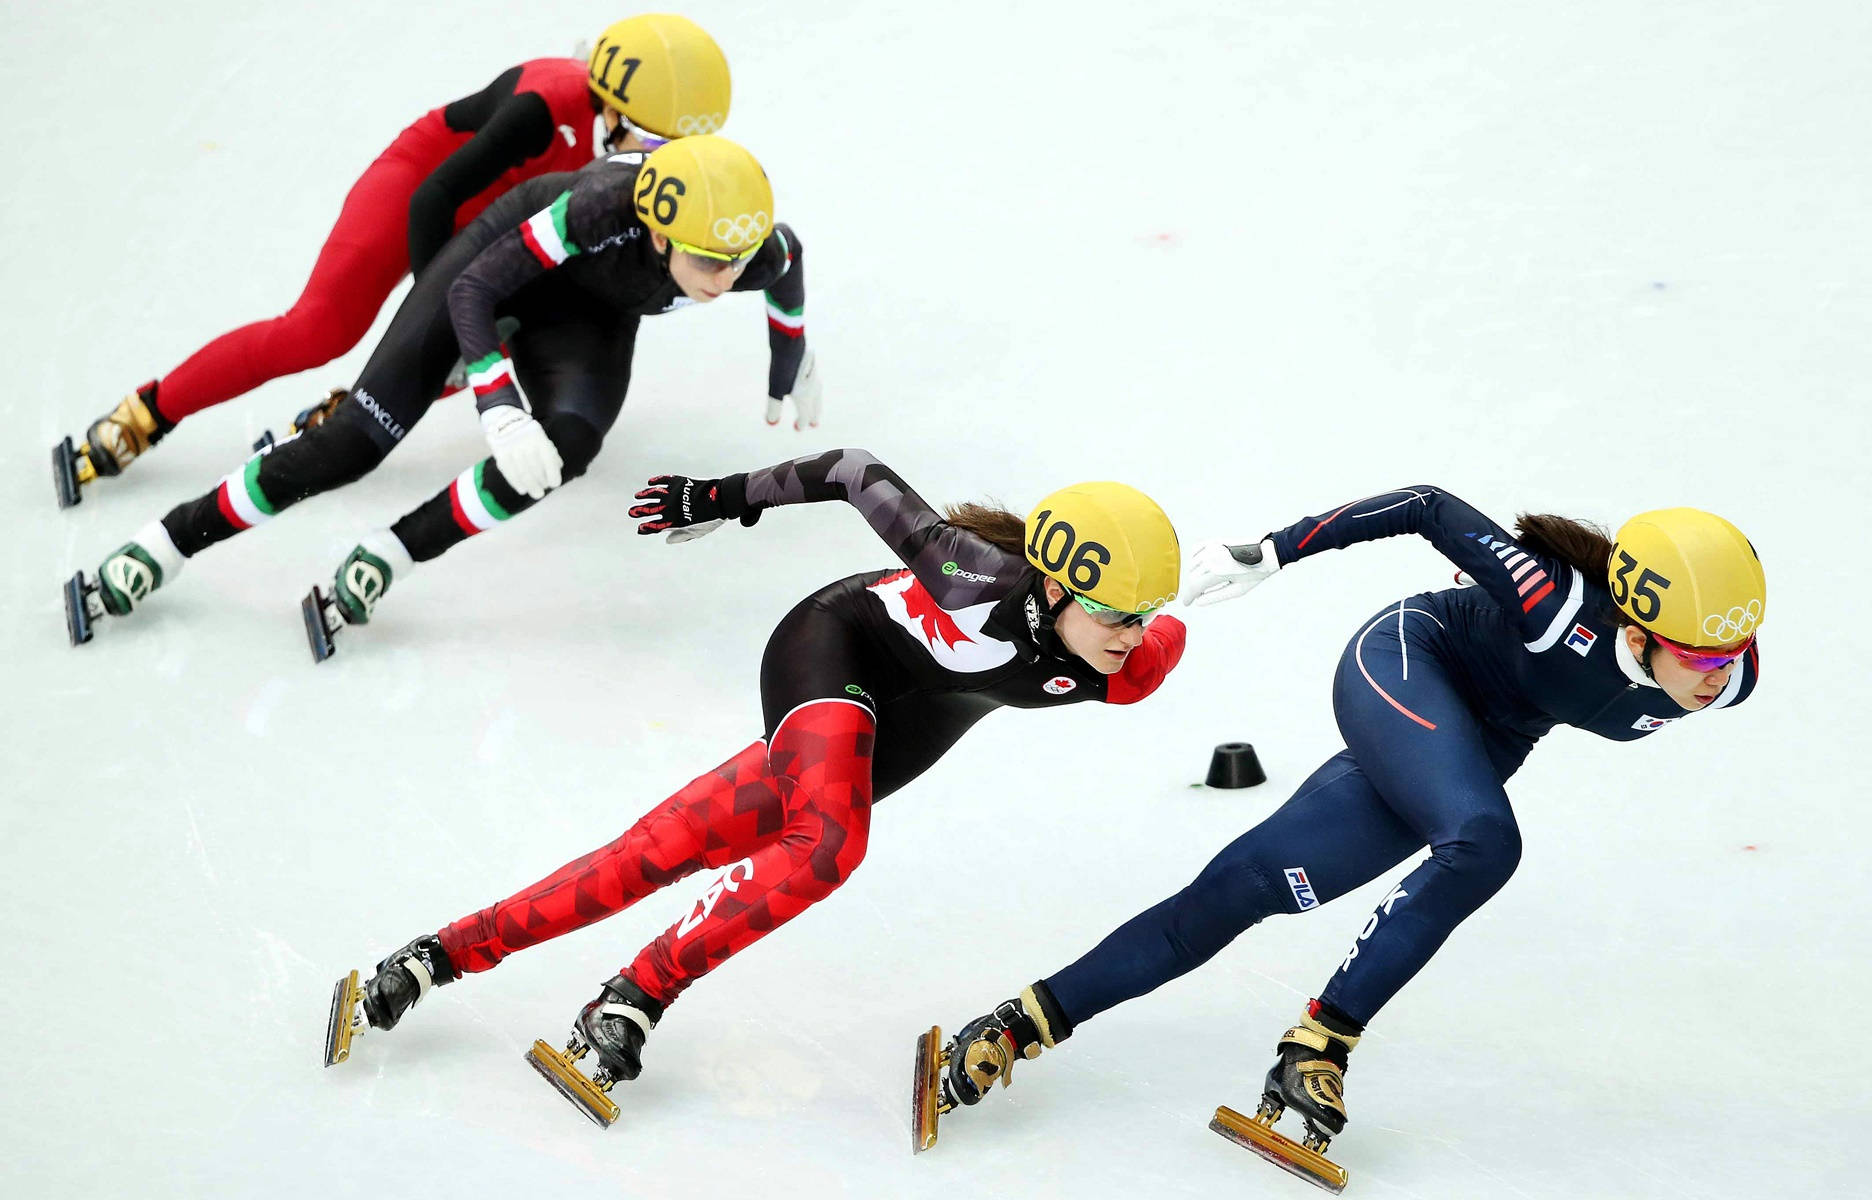 Women's Speed Skating Olympics 2014 Wallpaper